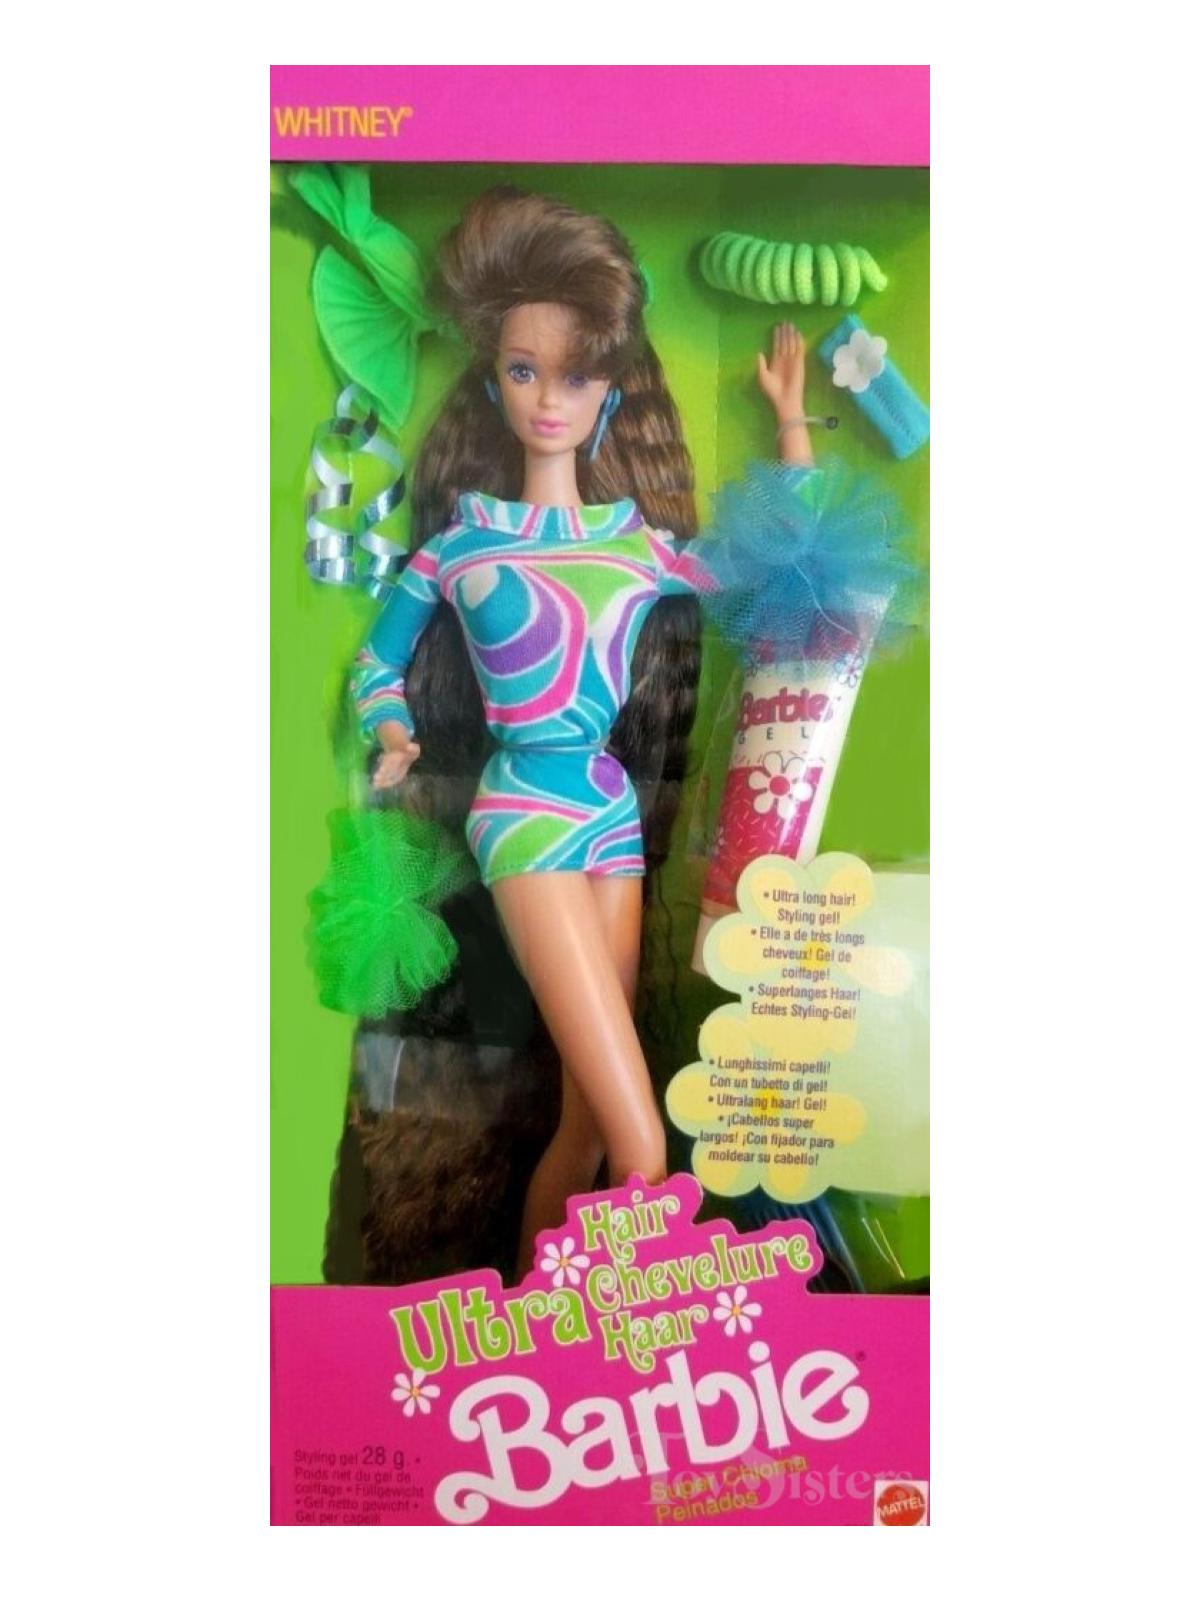 Кукла Barbie Whitney Totally hair, 1991